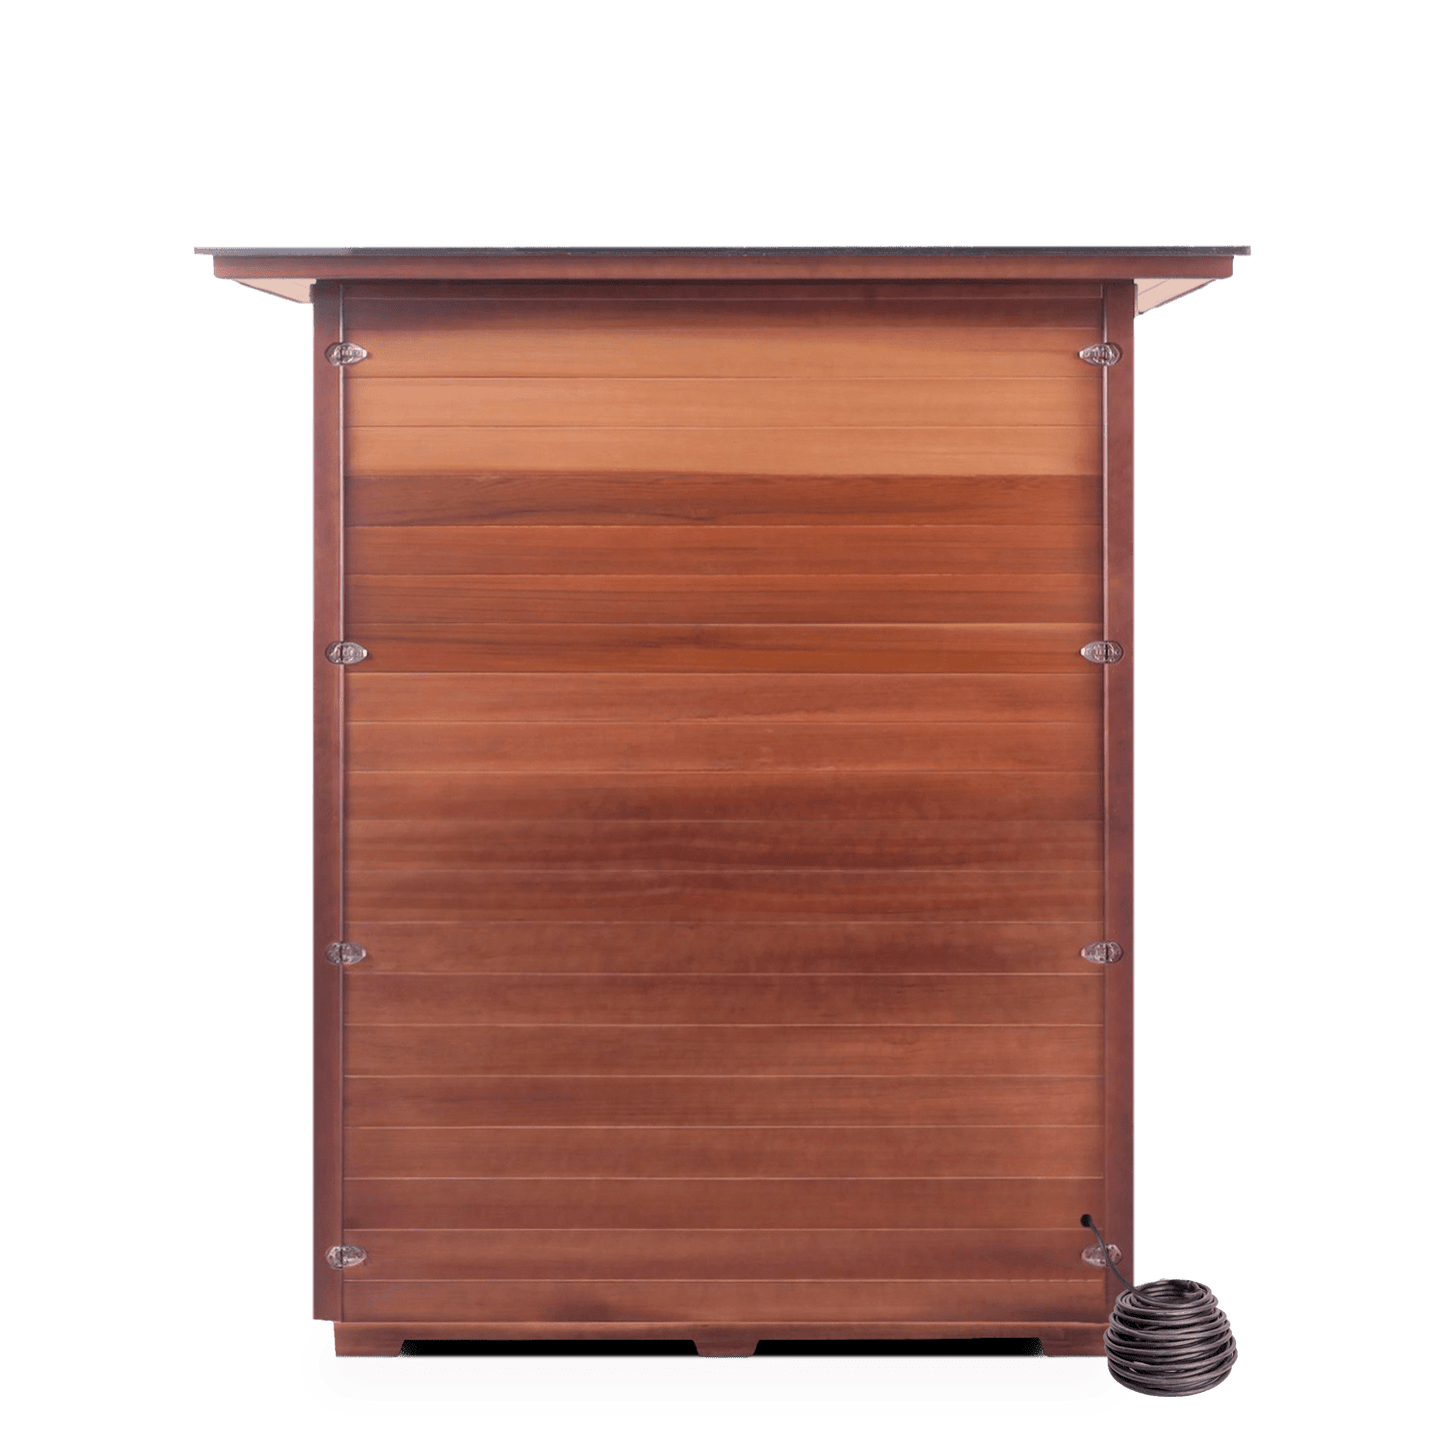 Enlighten TI-17377 Sunrise Indoor Dry Traditional 3-Person Sauna